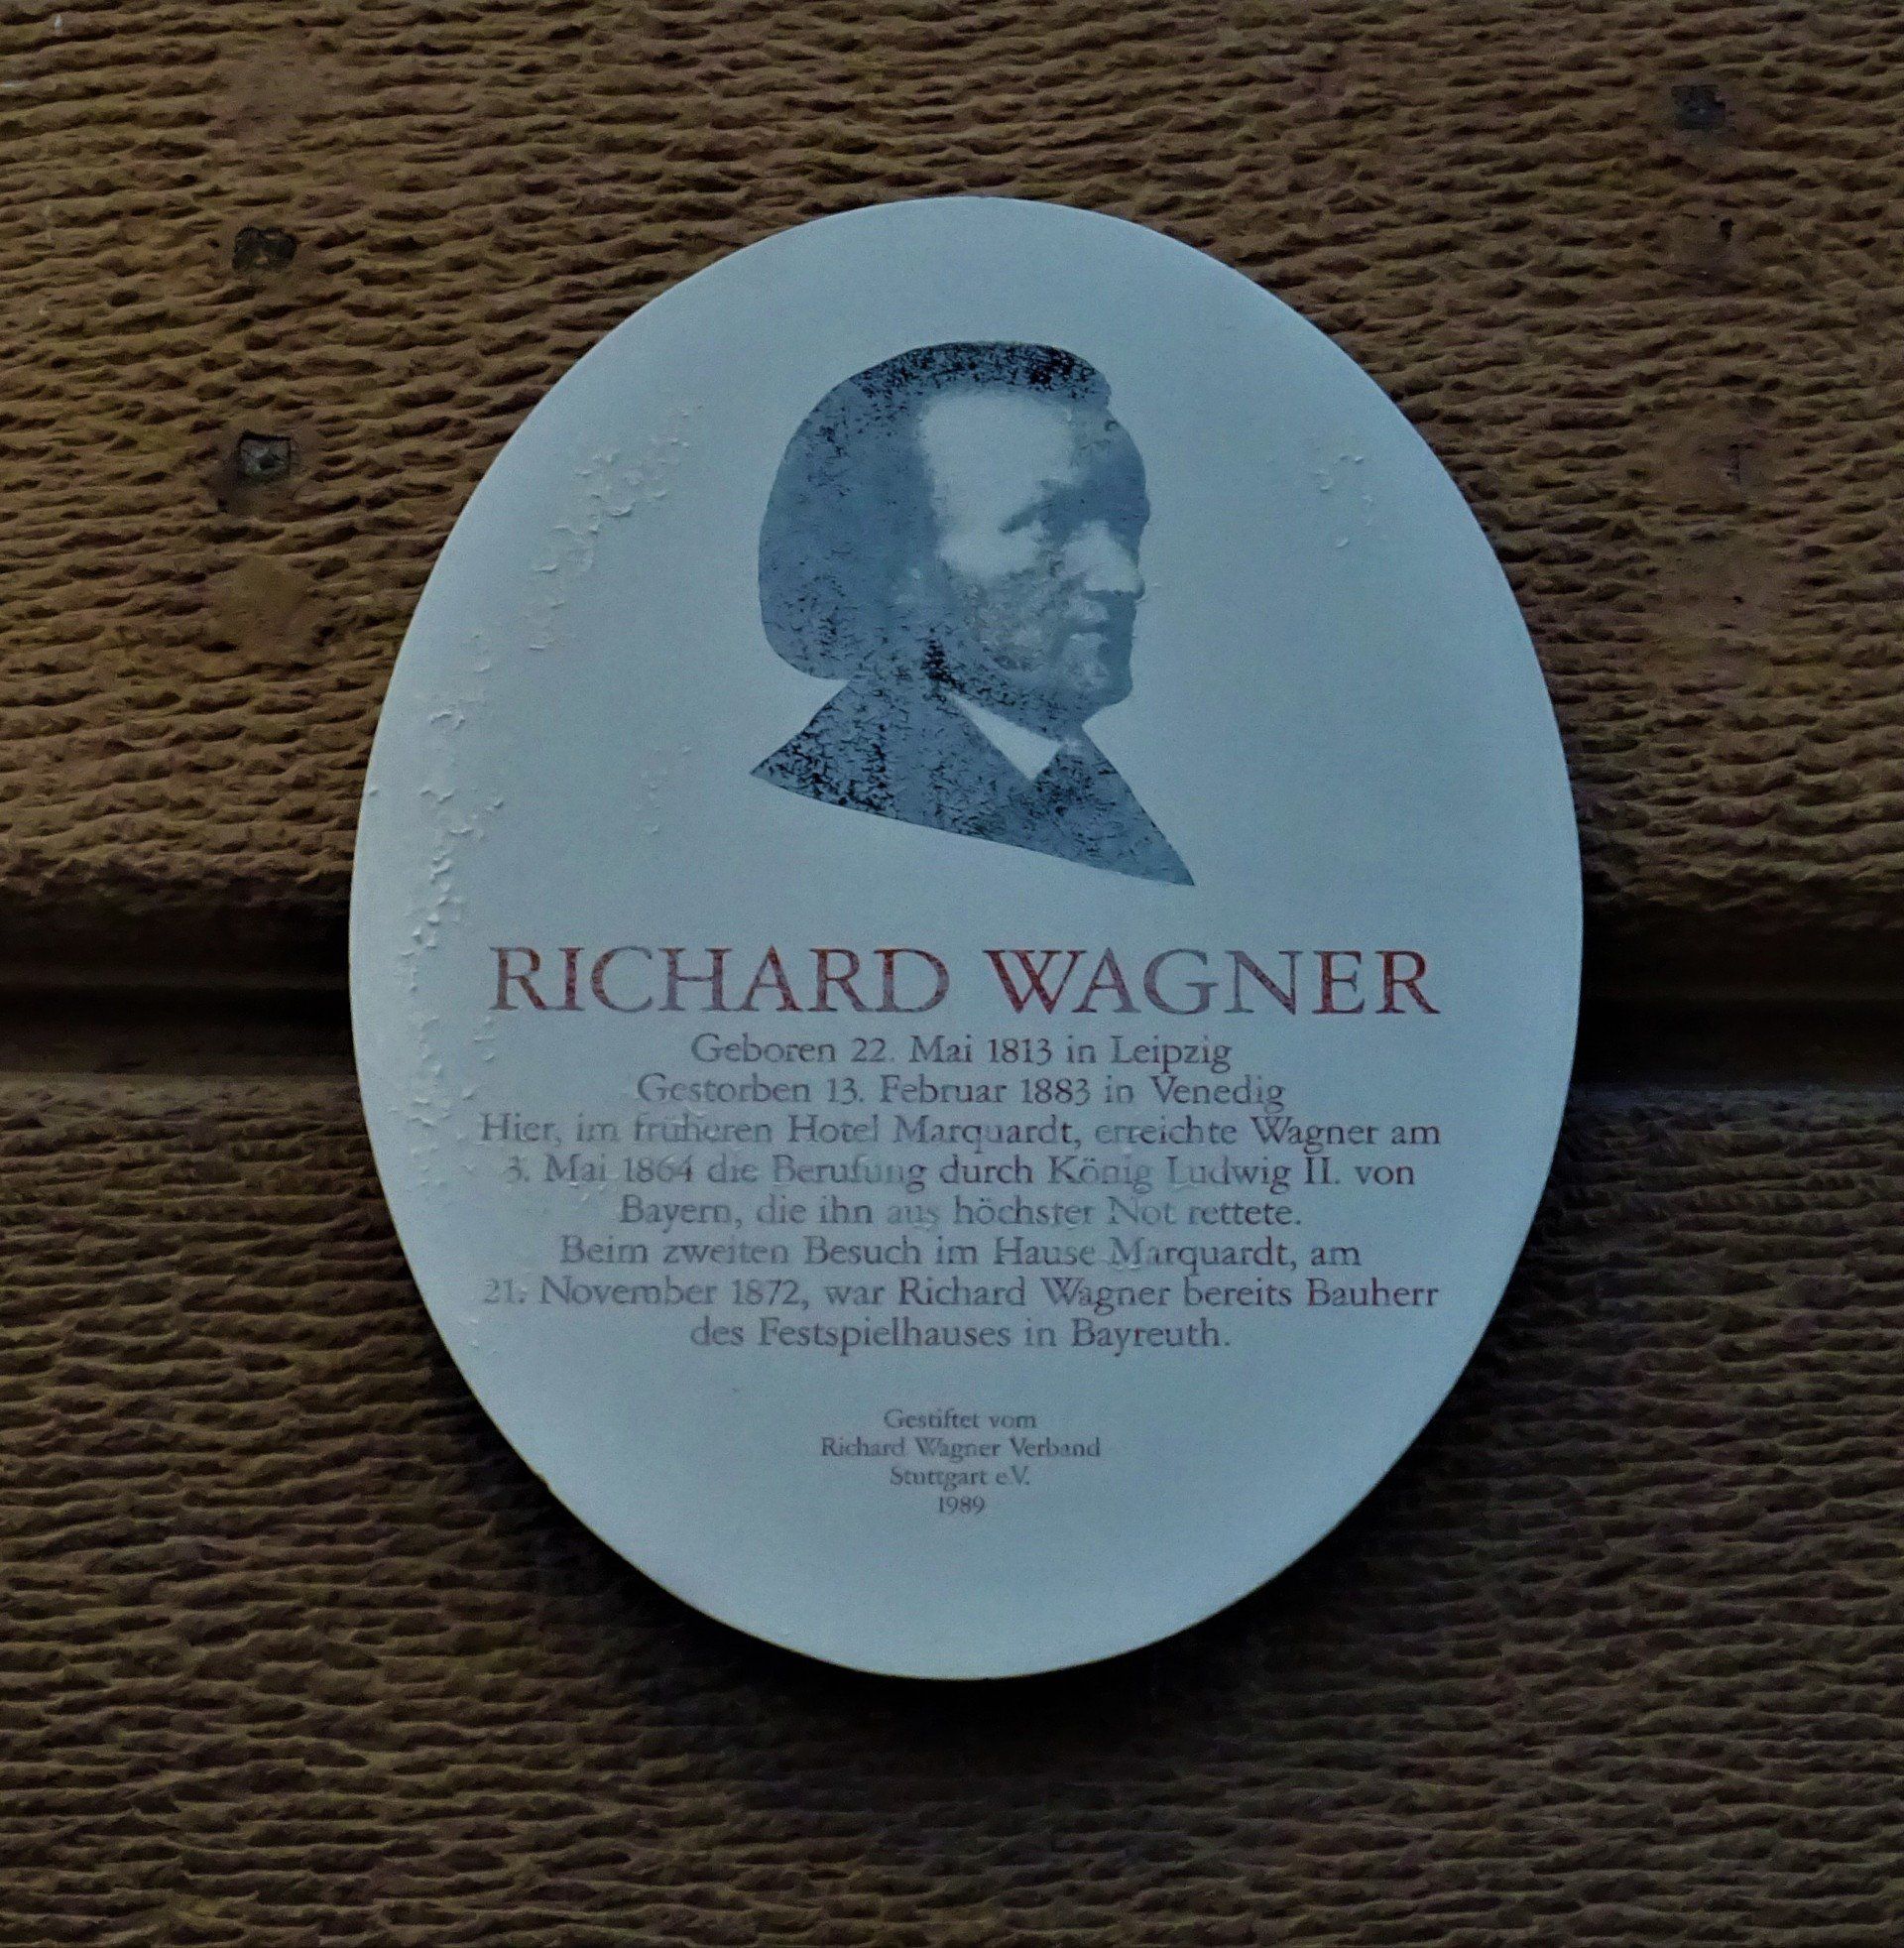 Gedenktafel Richard Wagner Verband Stuttgart RWV Hotel Marquardt König Ludwig II Bayern